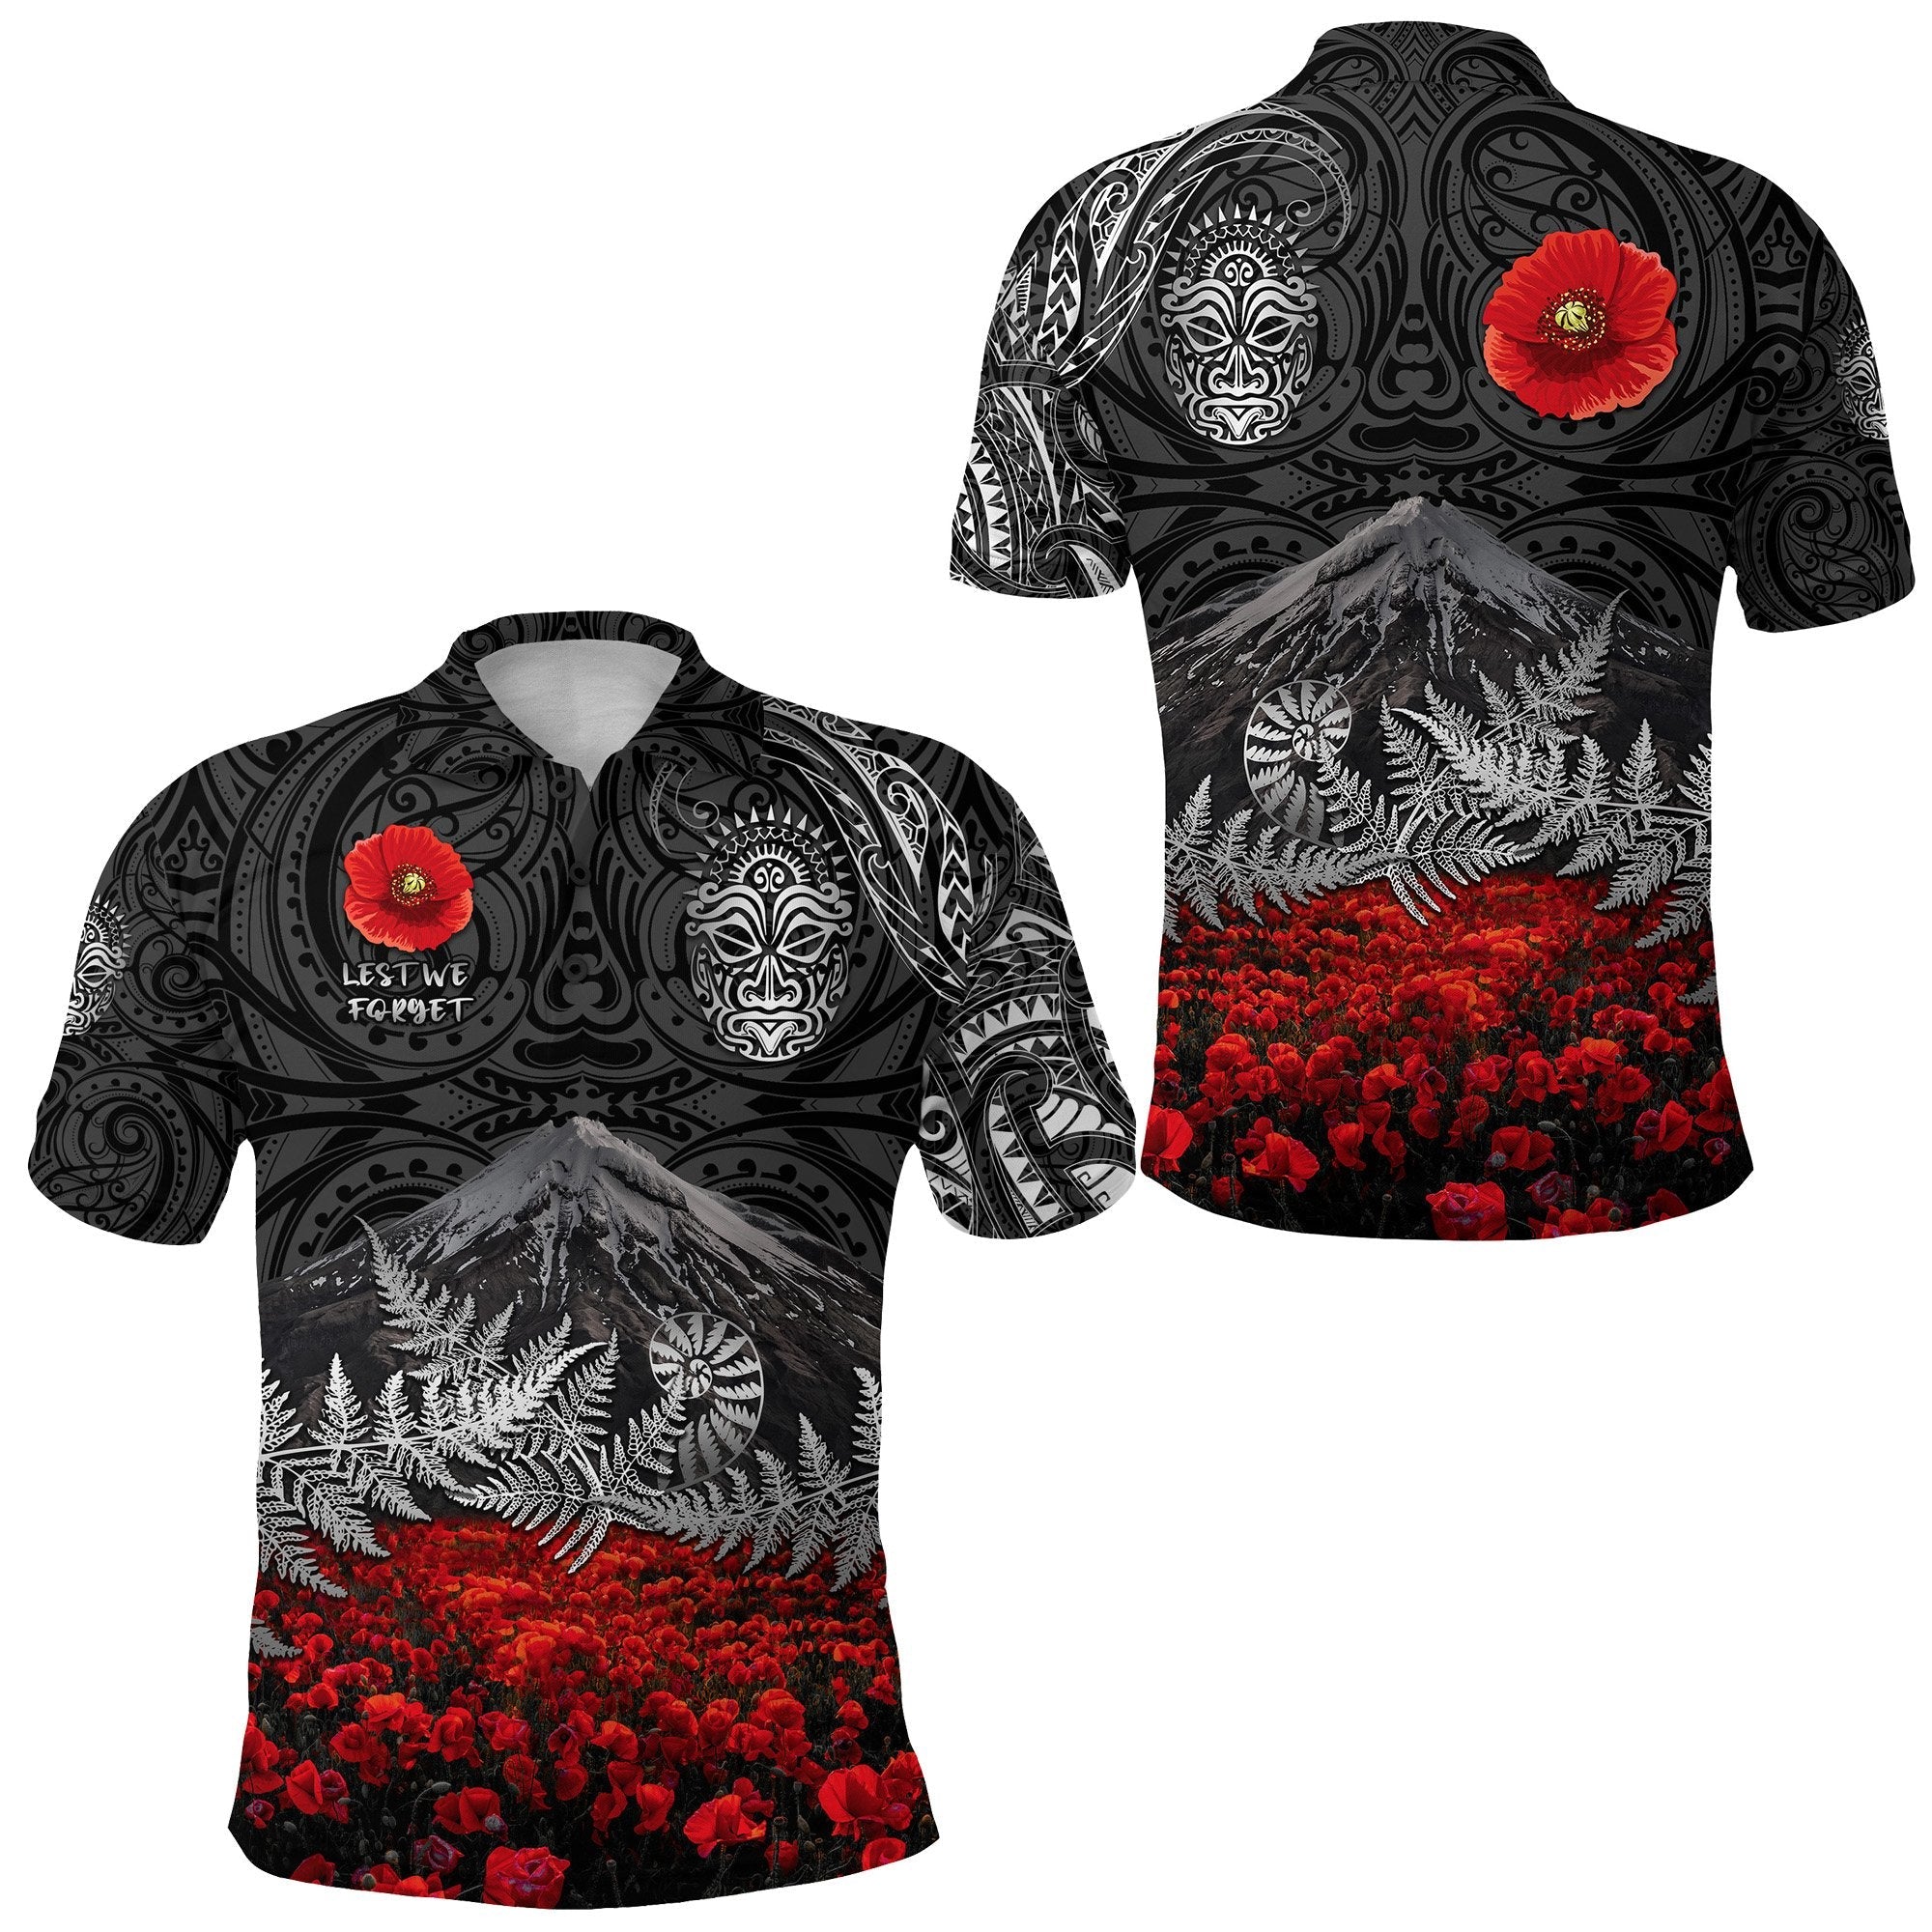 warriors-rugby-polo-shirt-new-zealand-mount-taranaki-with-poppy-flowers-anzac-vibes-black